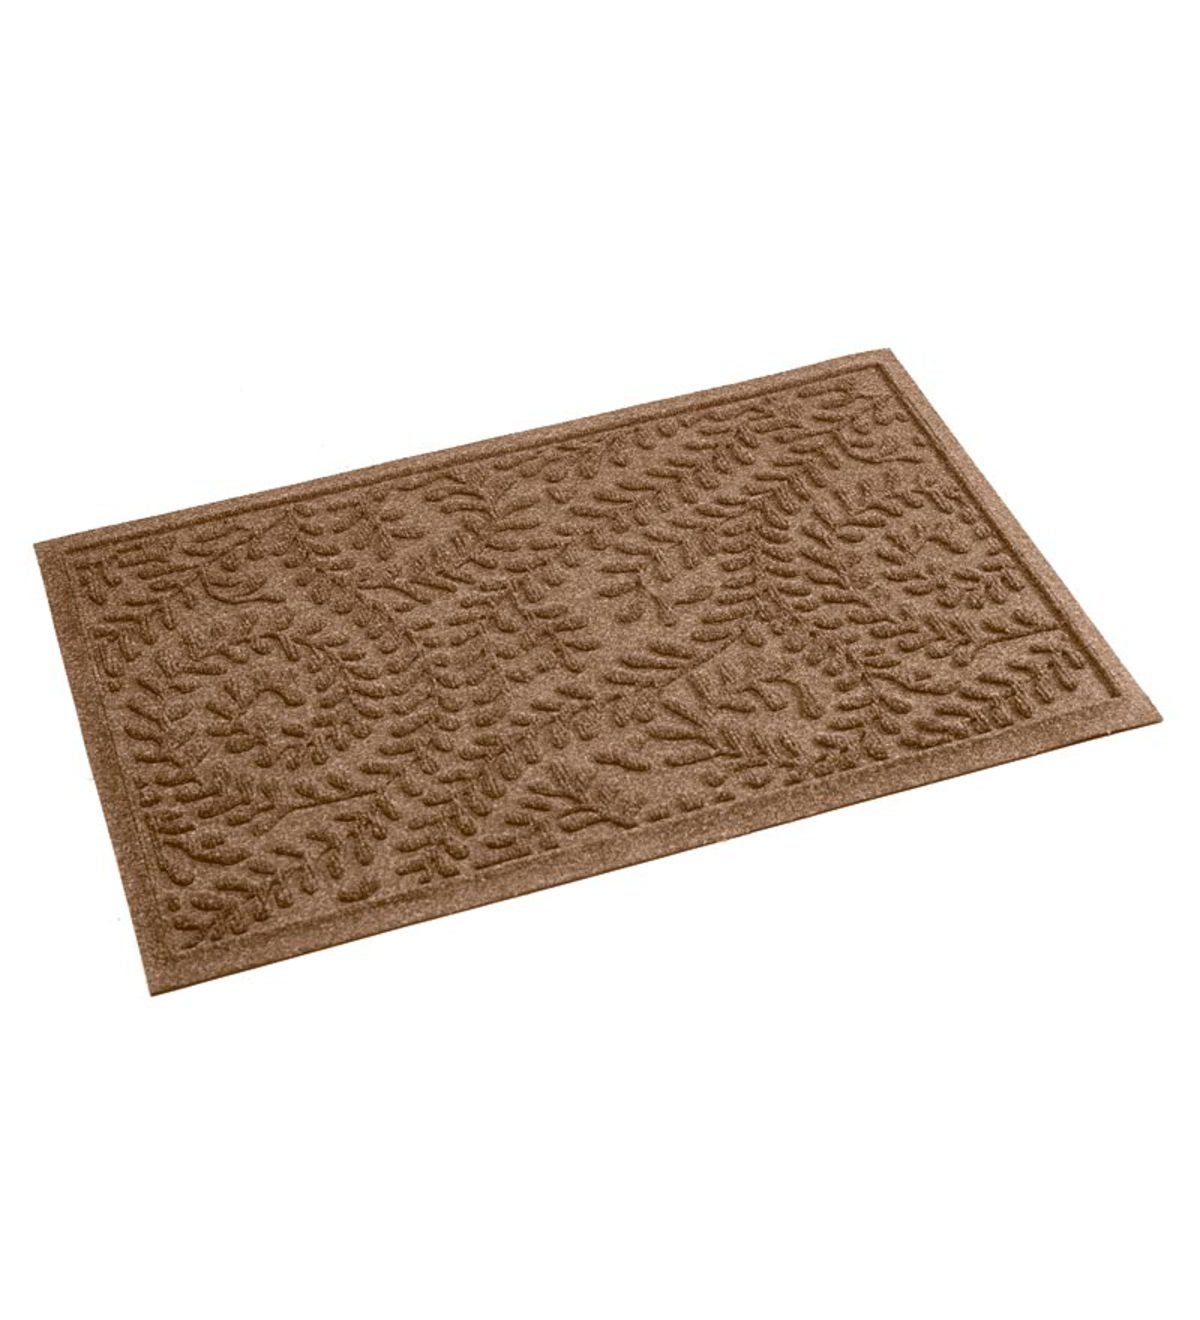 34”W x 51-1/2”L Large Boxwood Waterhog Doormat - Medium Brown